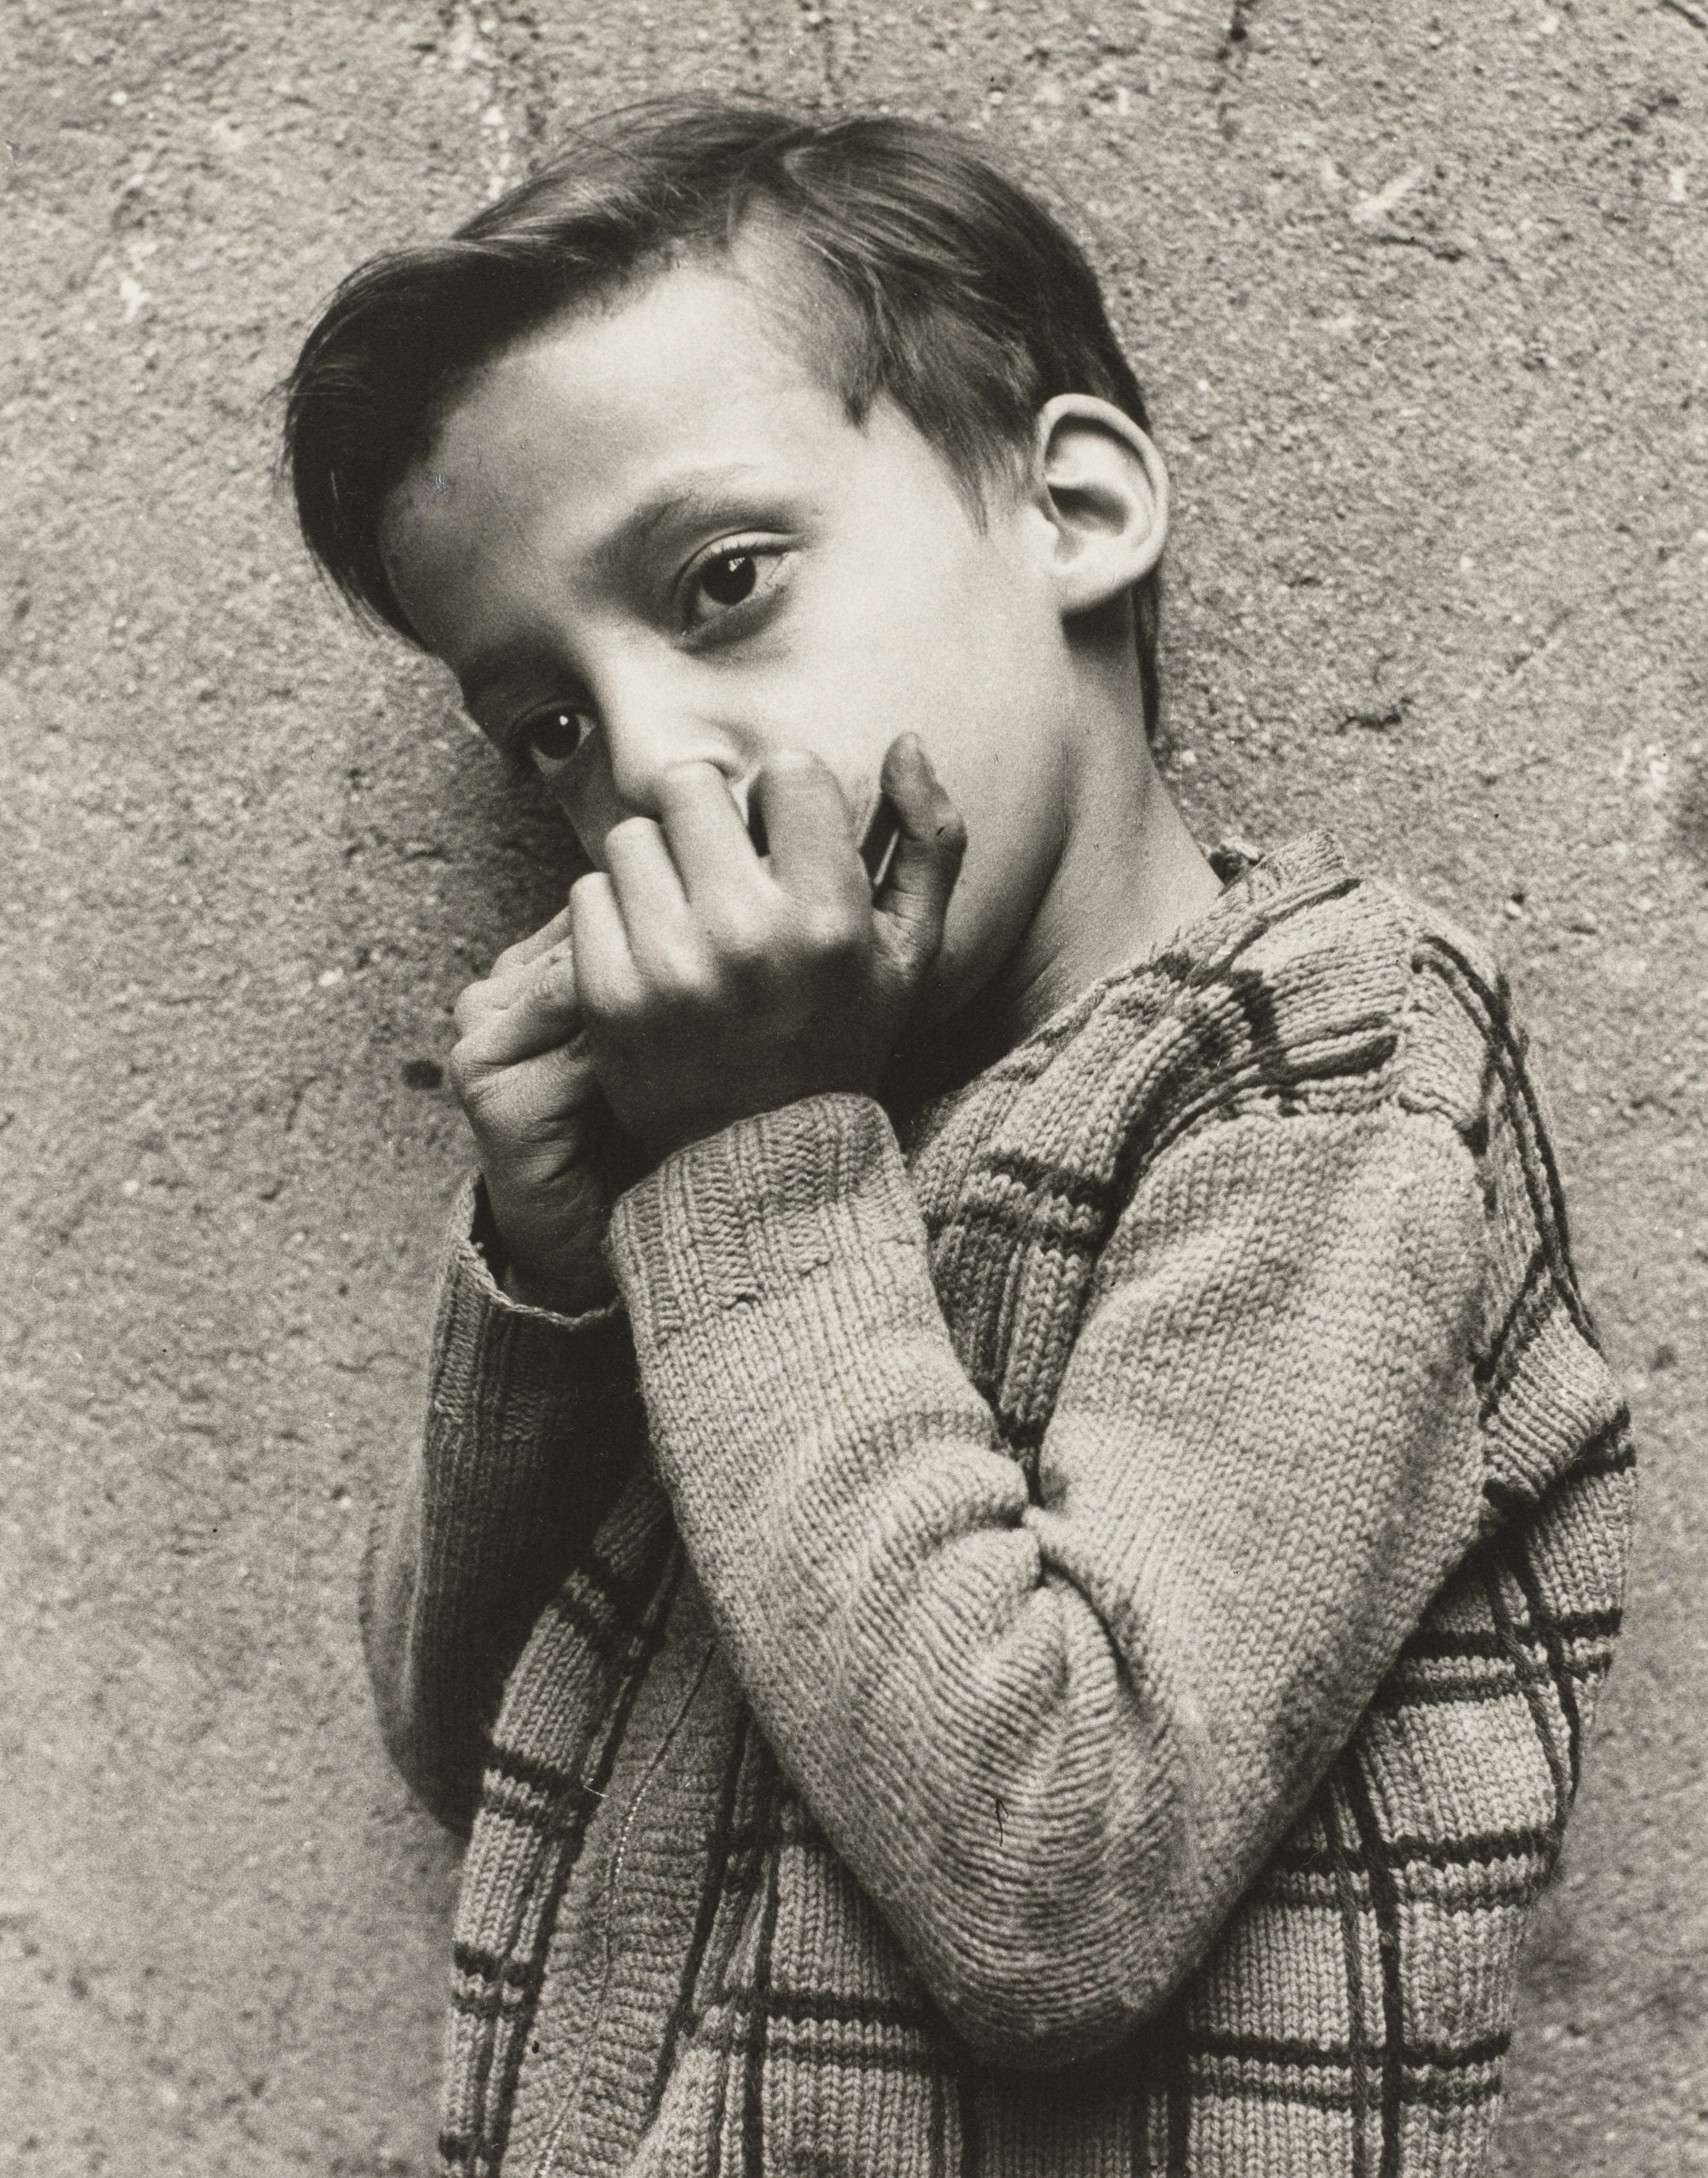 Boy Playing Harmonica, East Harlem, NY